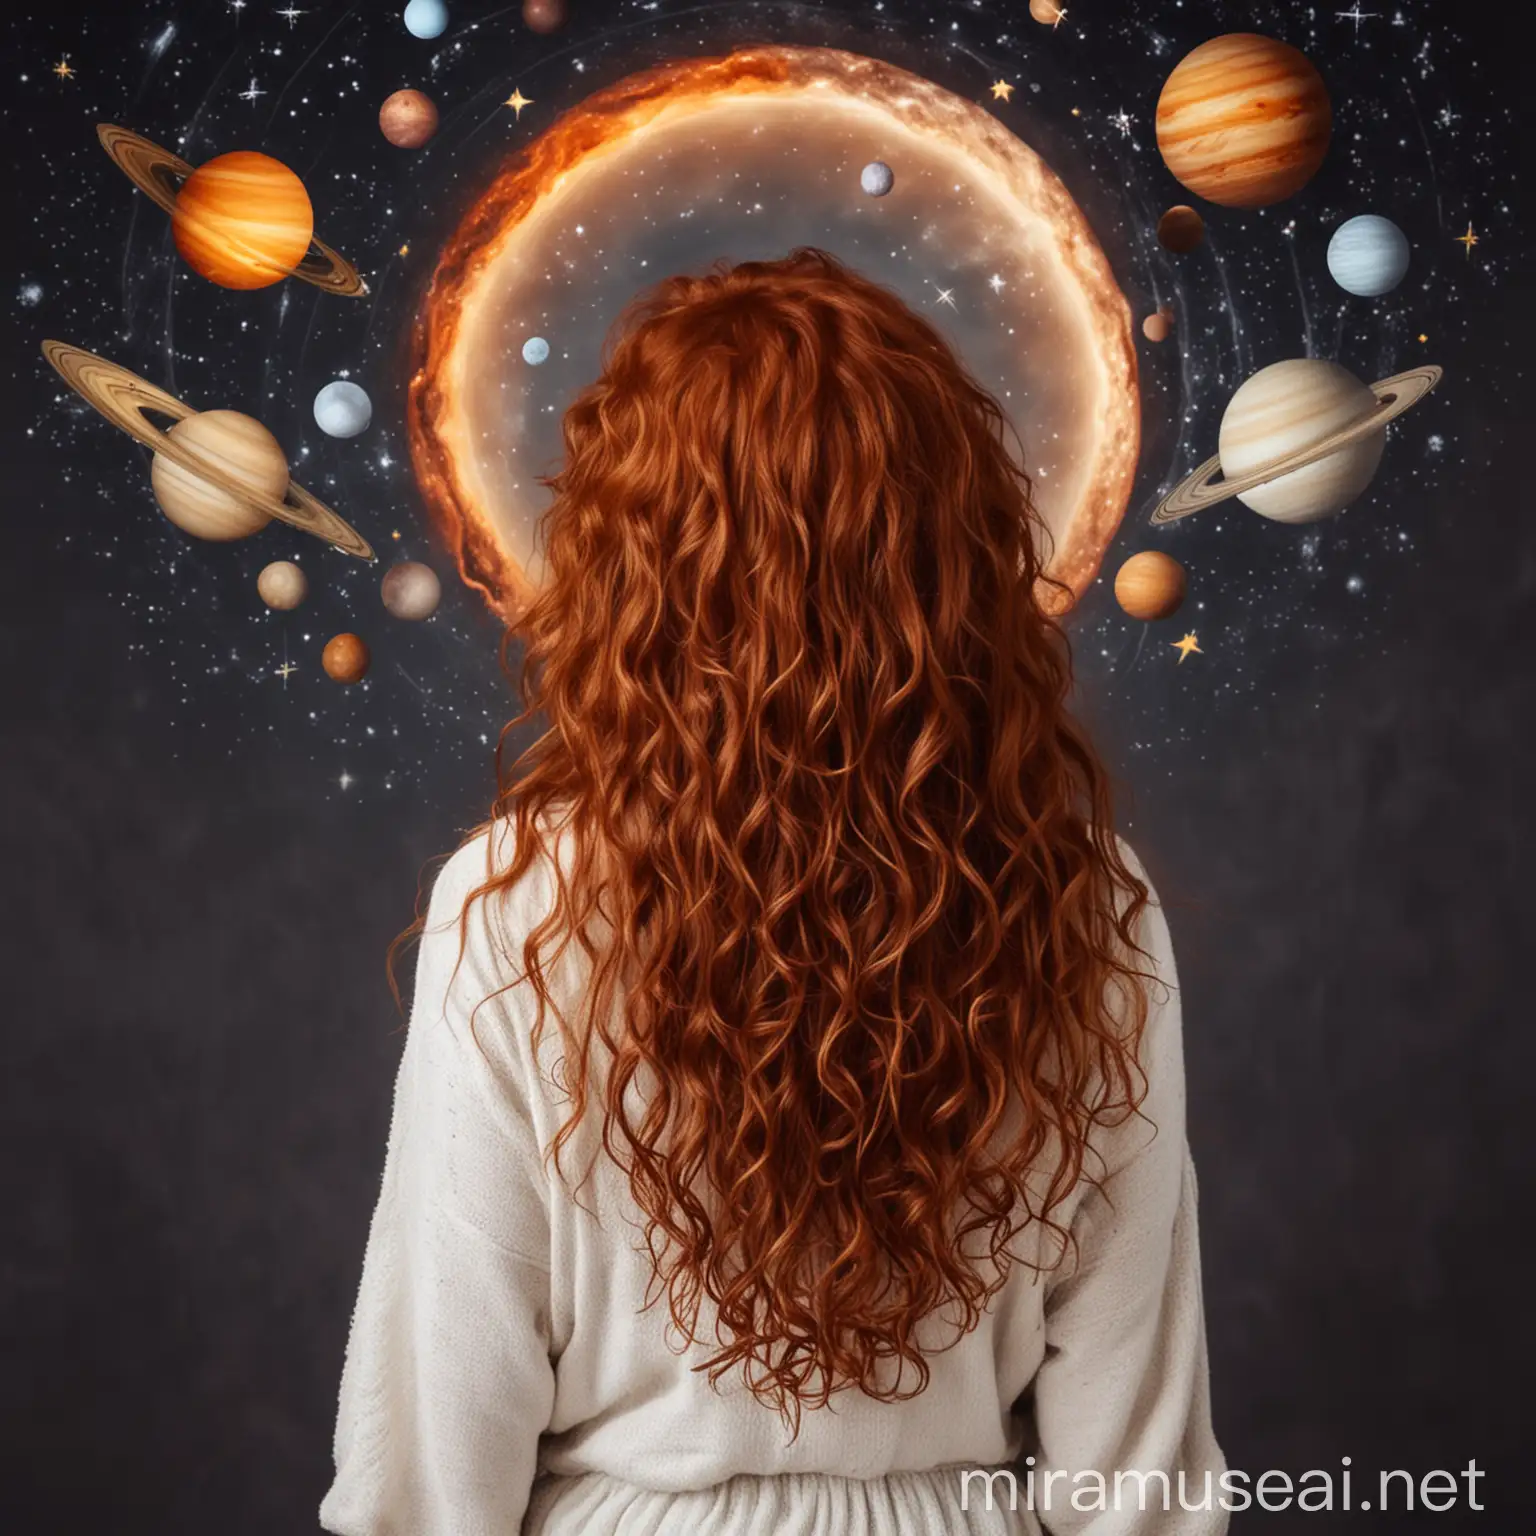 Cosmic Curly Redhead Astrologer in Cozy Atmosphere